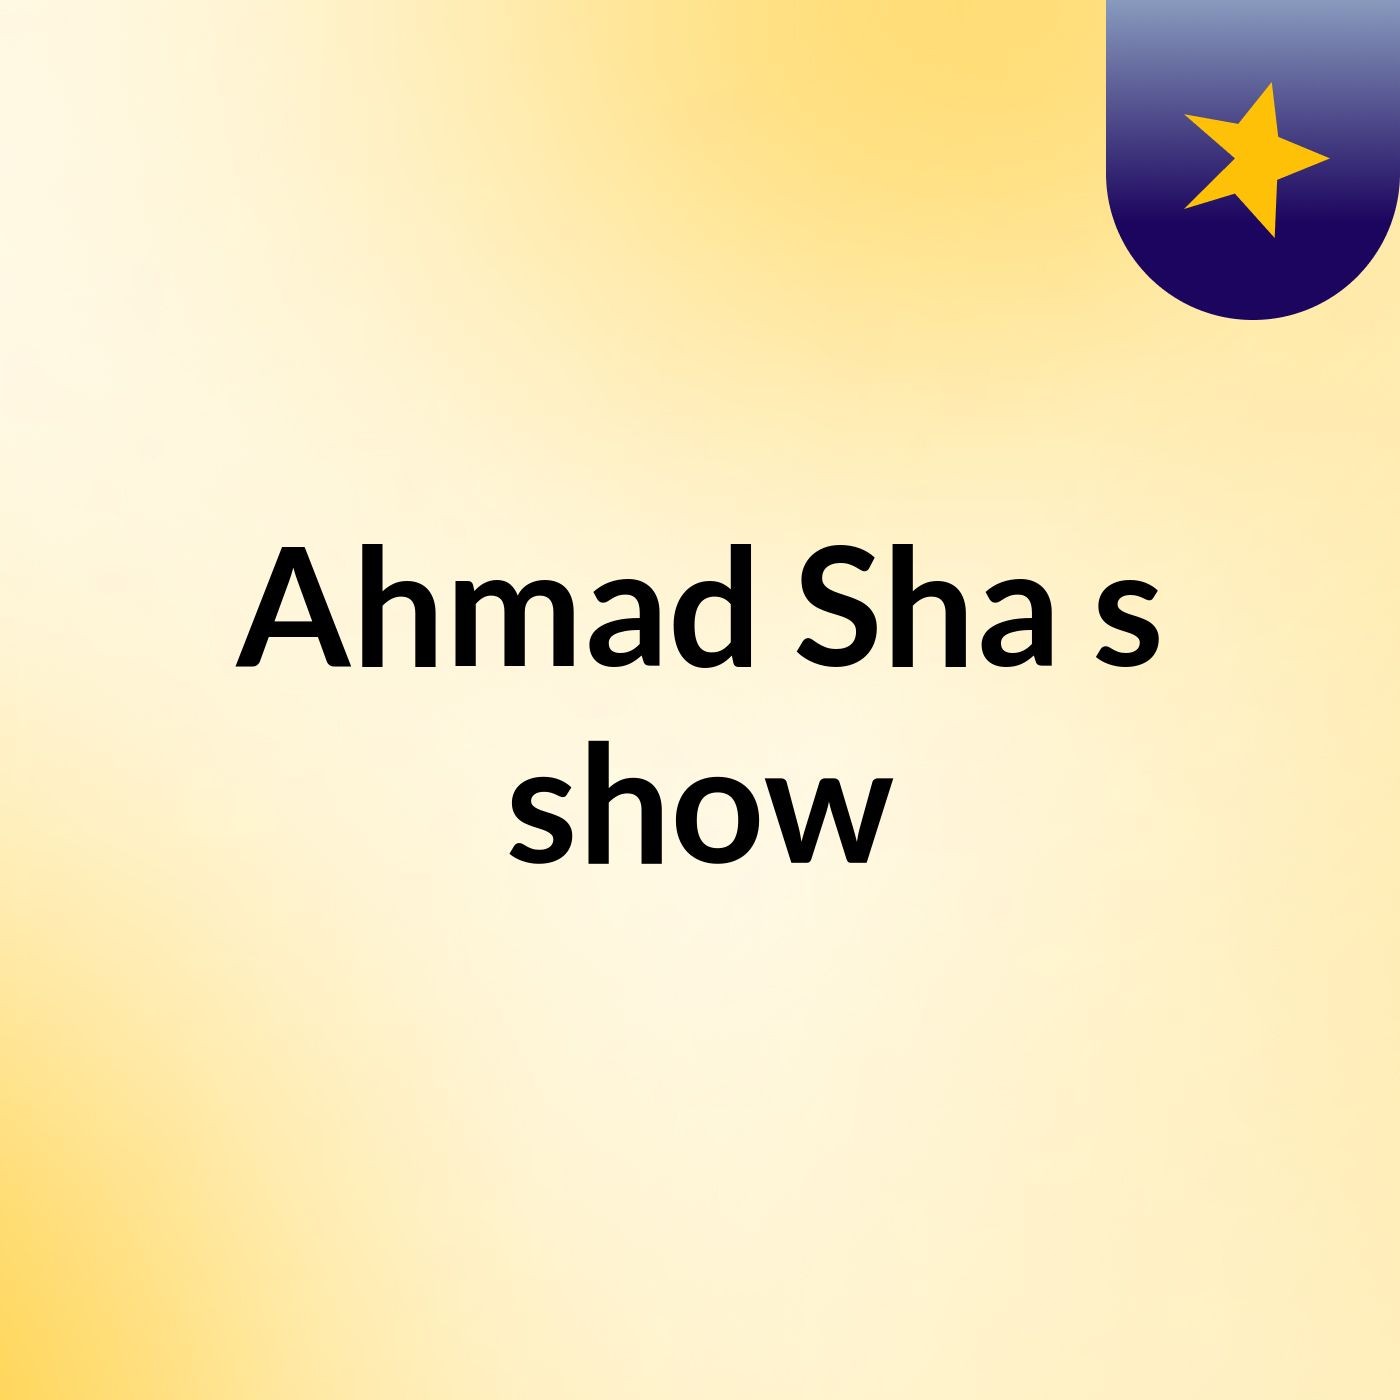 Ahmad Sha's show